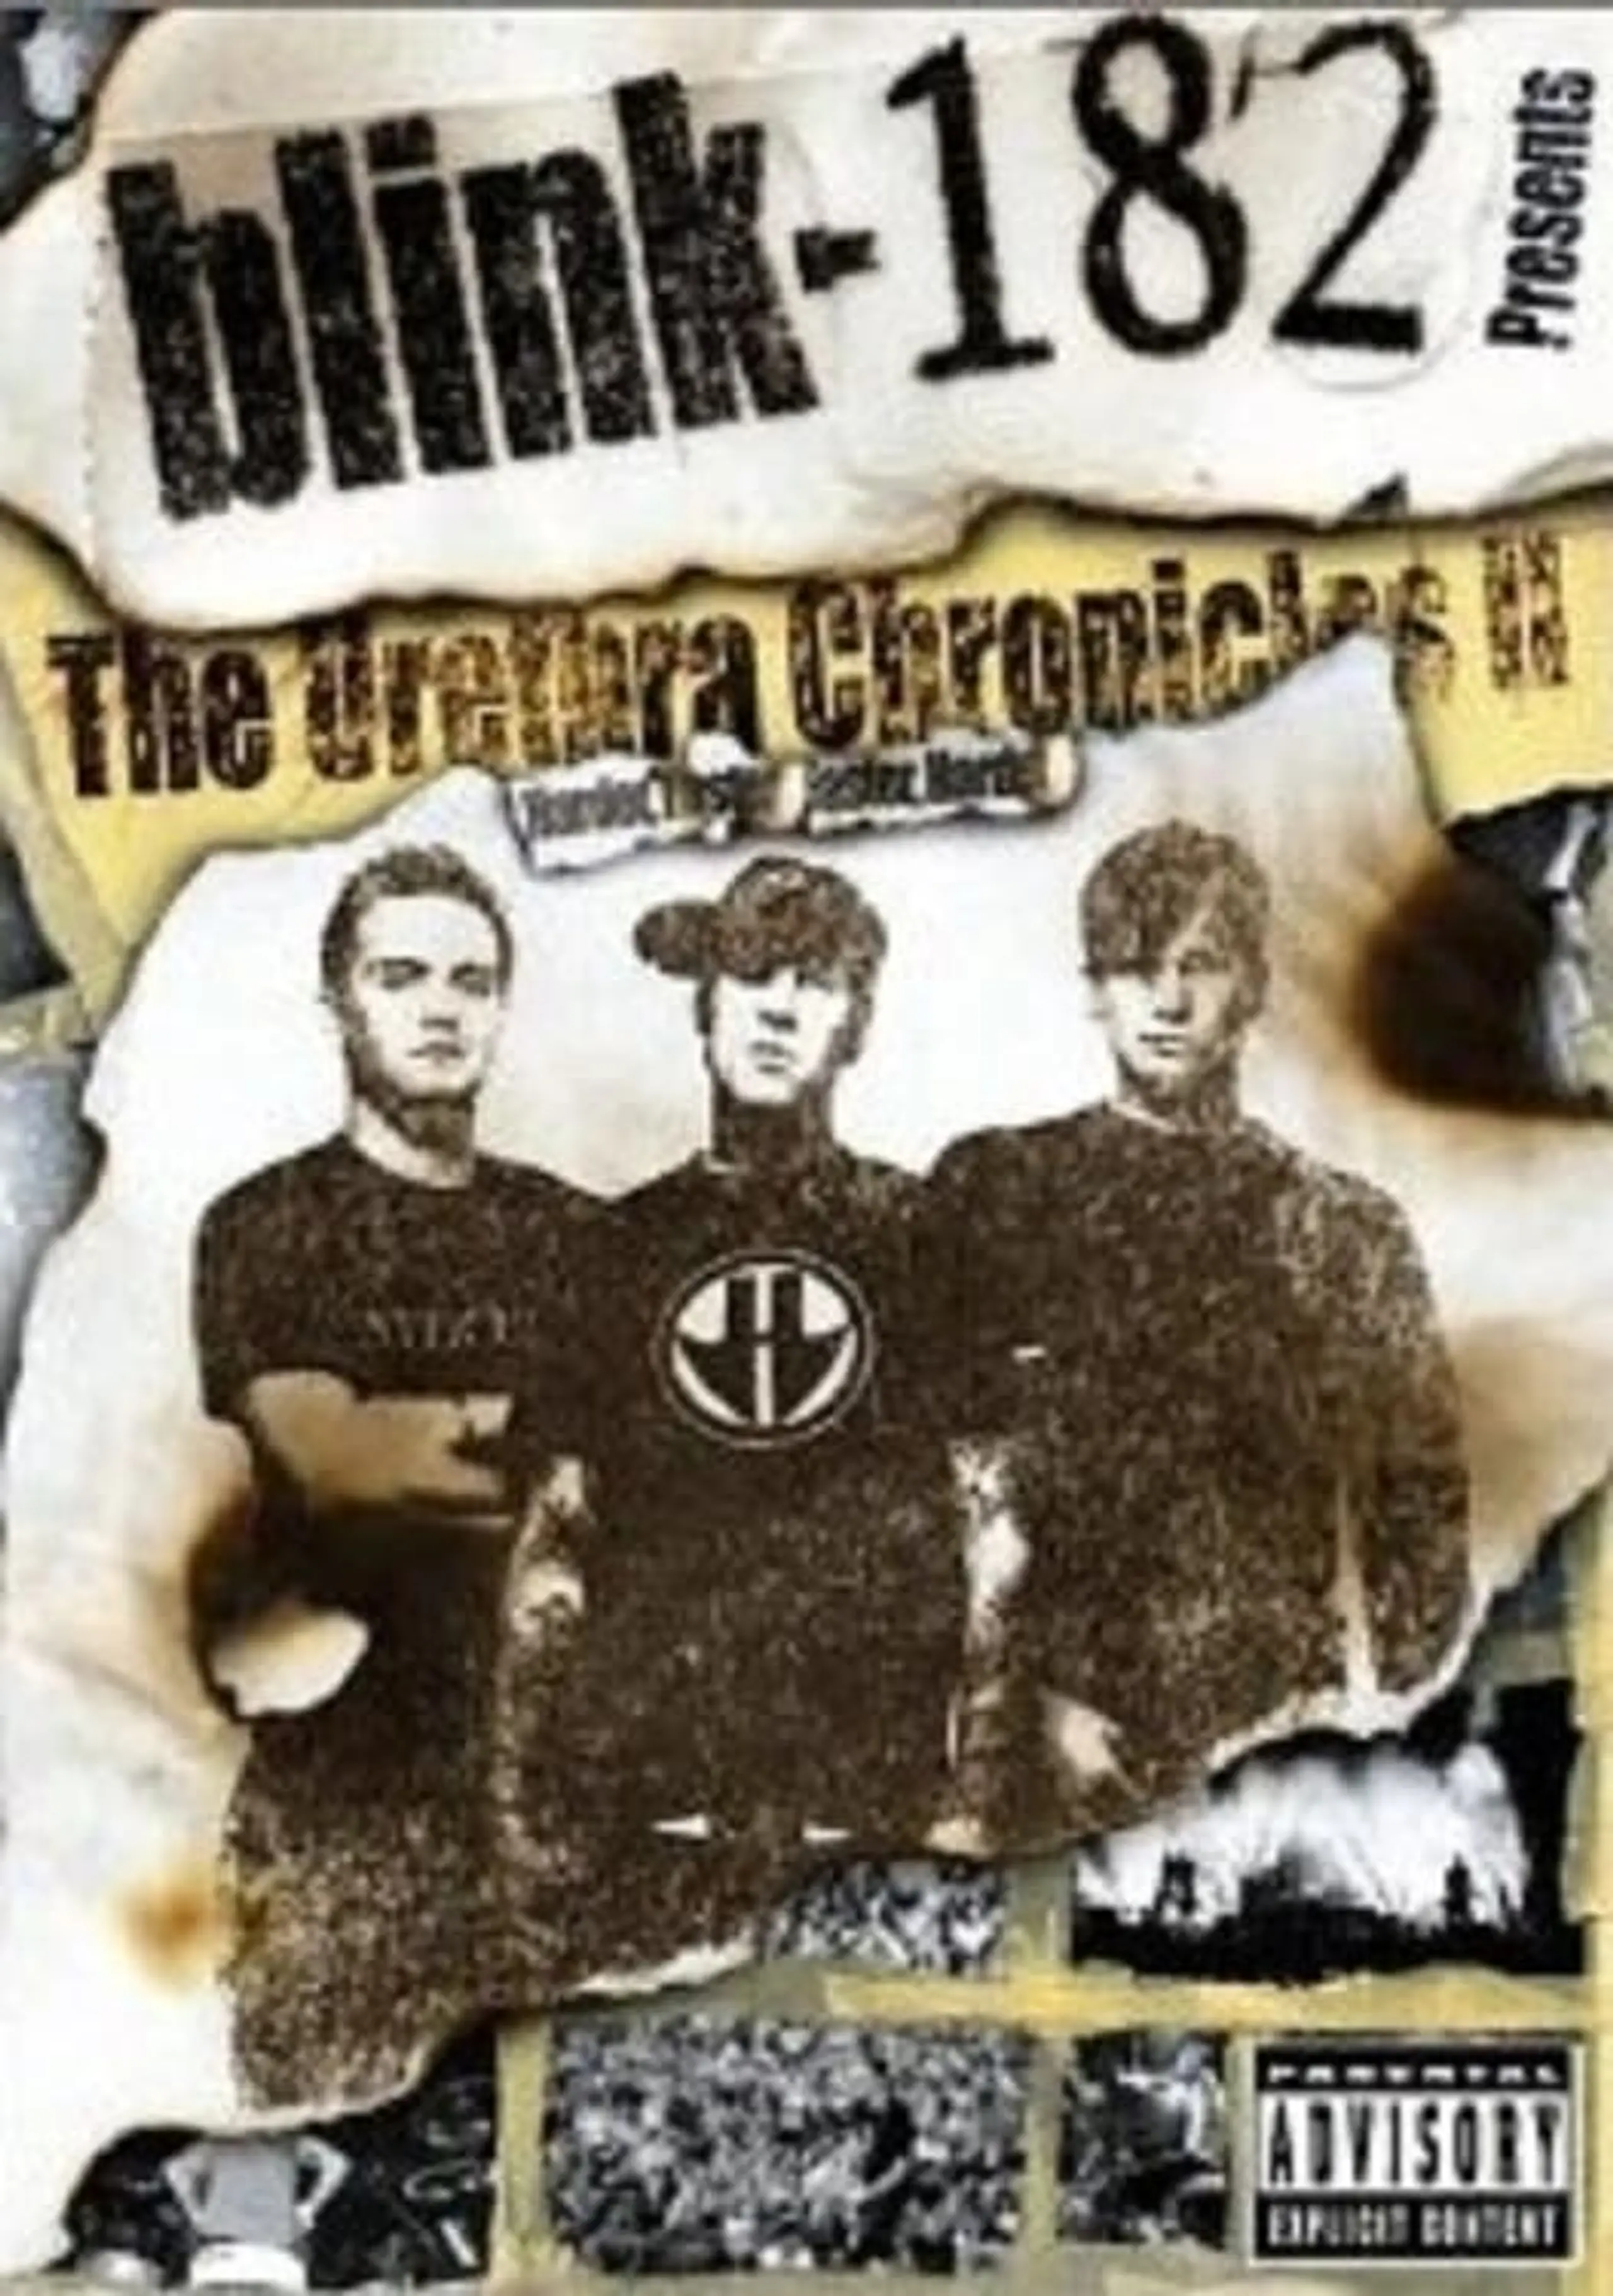 blink-182: The Urethra Chronicles II: Harder, Faster. Faster, Harder